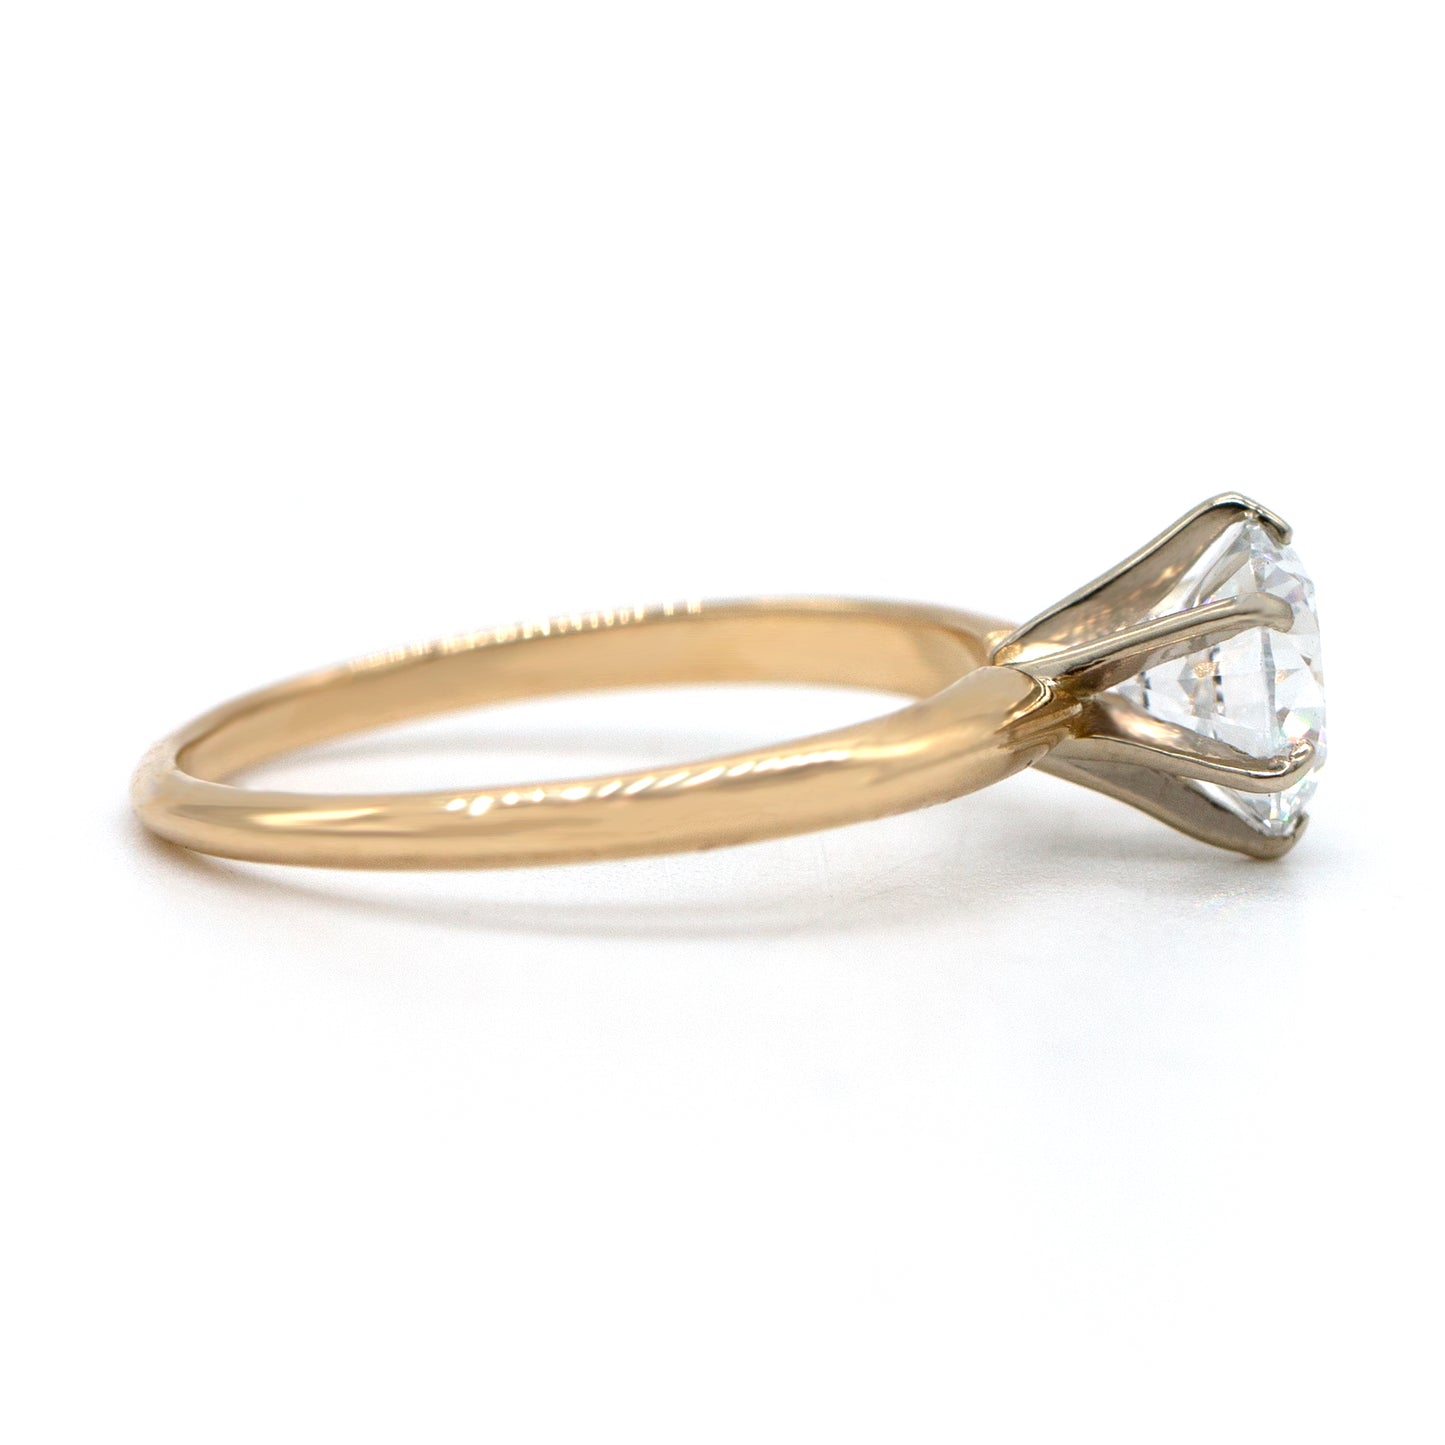 14K Gold 1.01ct LG VVS2 G-H Diamond Solitaire Ring